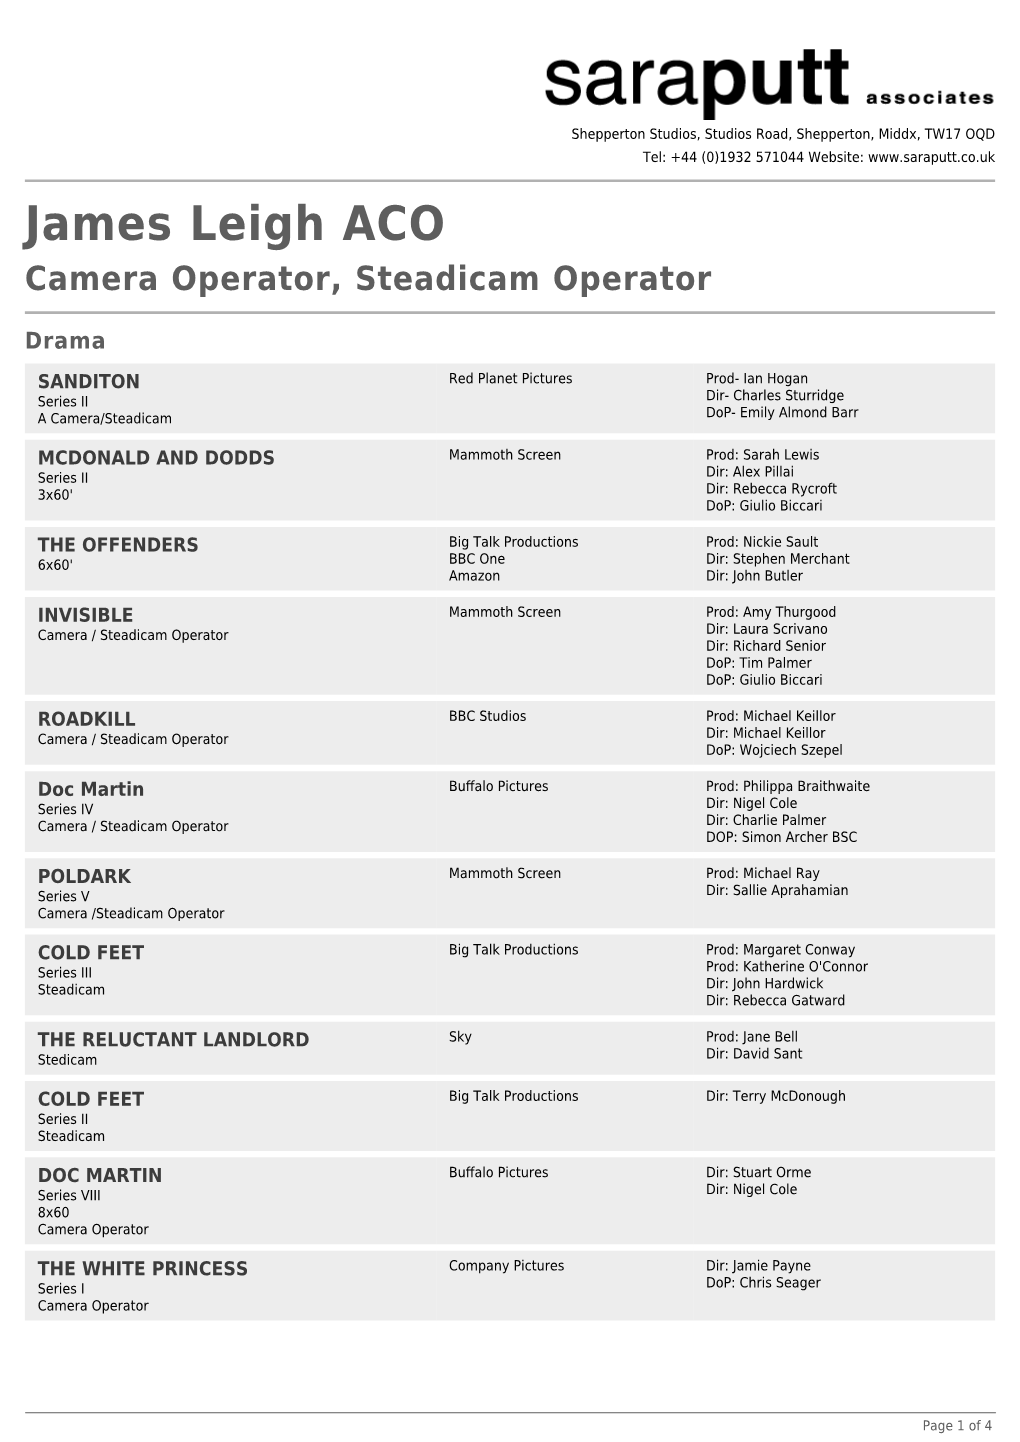 James Leigh ACO Camera Operator, Steadicam Operator